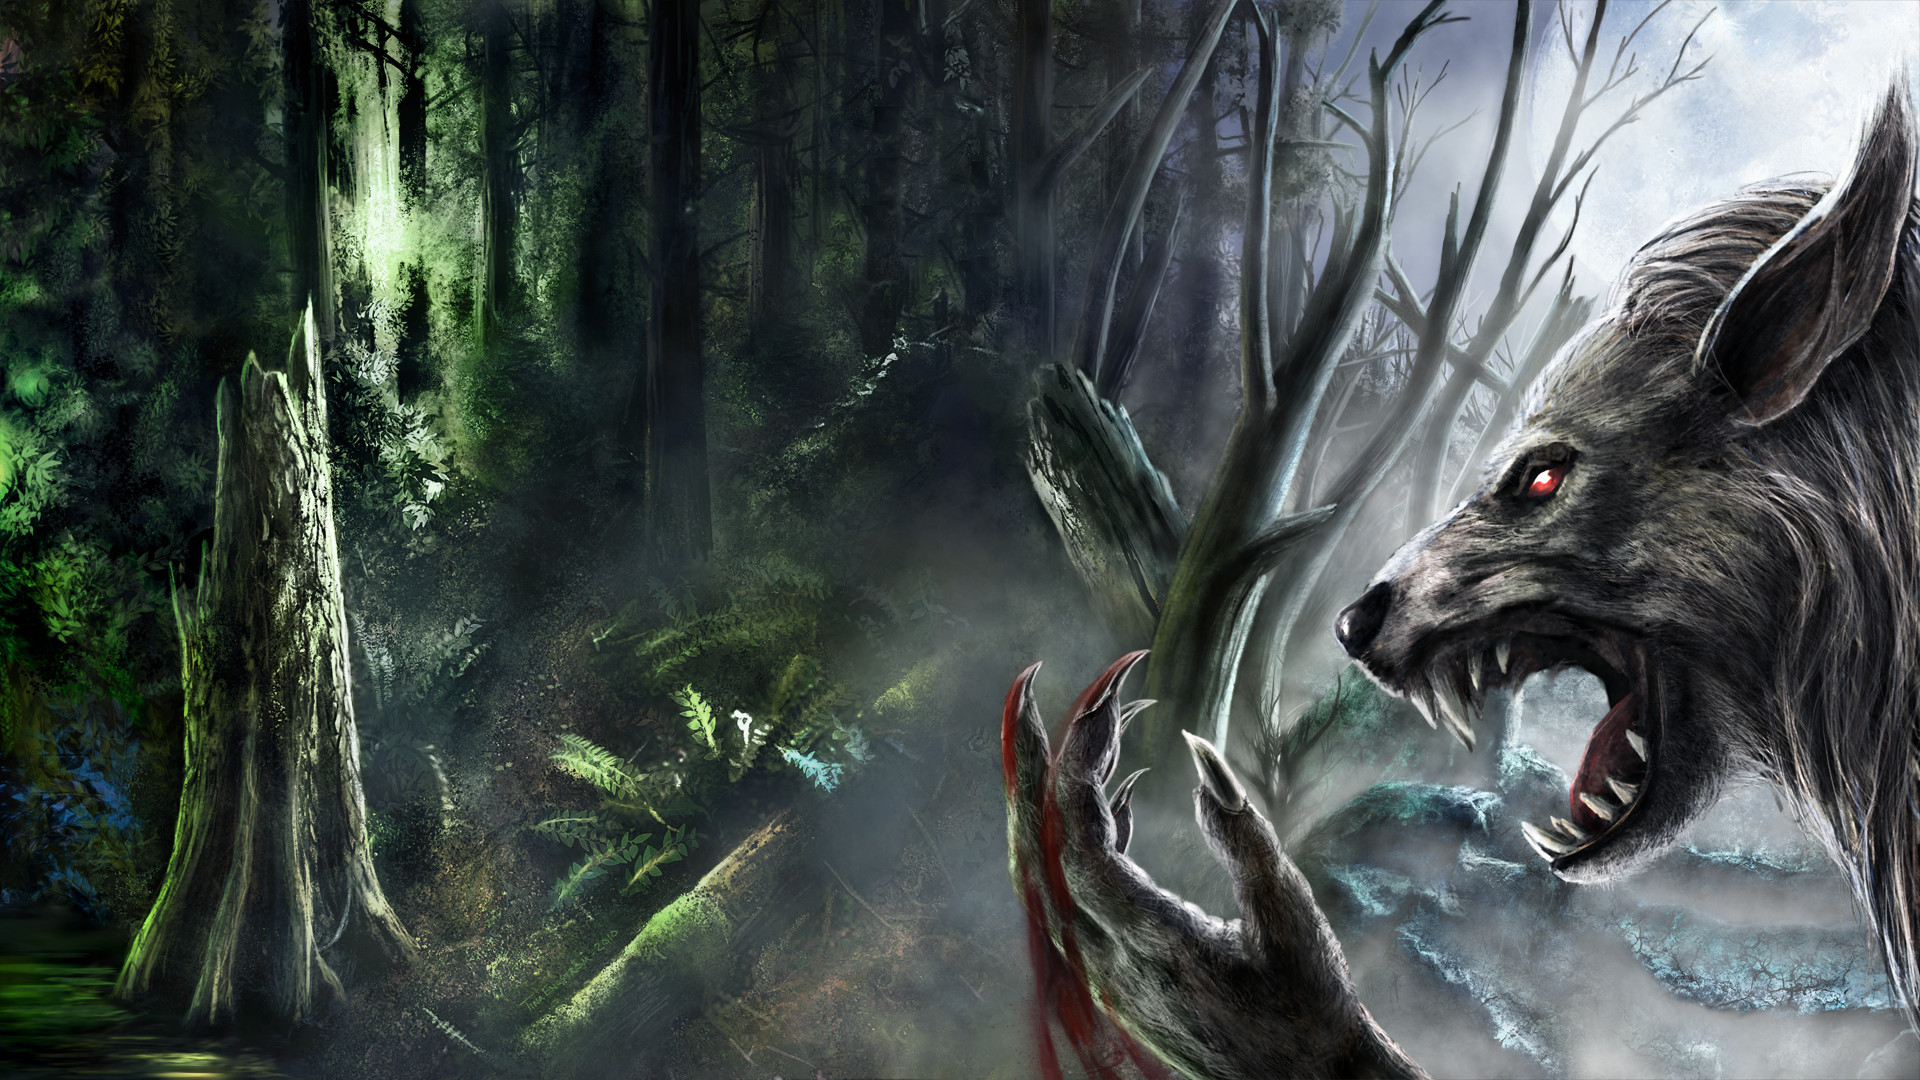 Werewolf fantasy art dark monster creatures blood fangs trees forest spooky creepy scary evil wallpaper